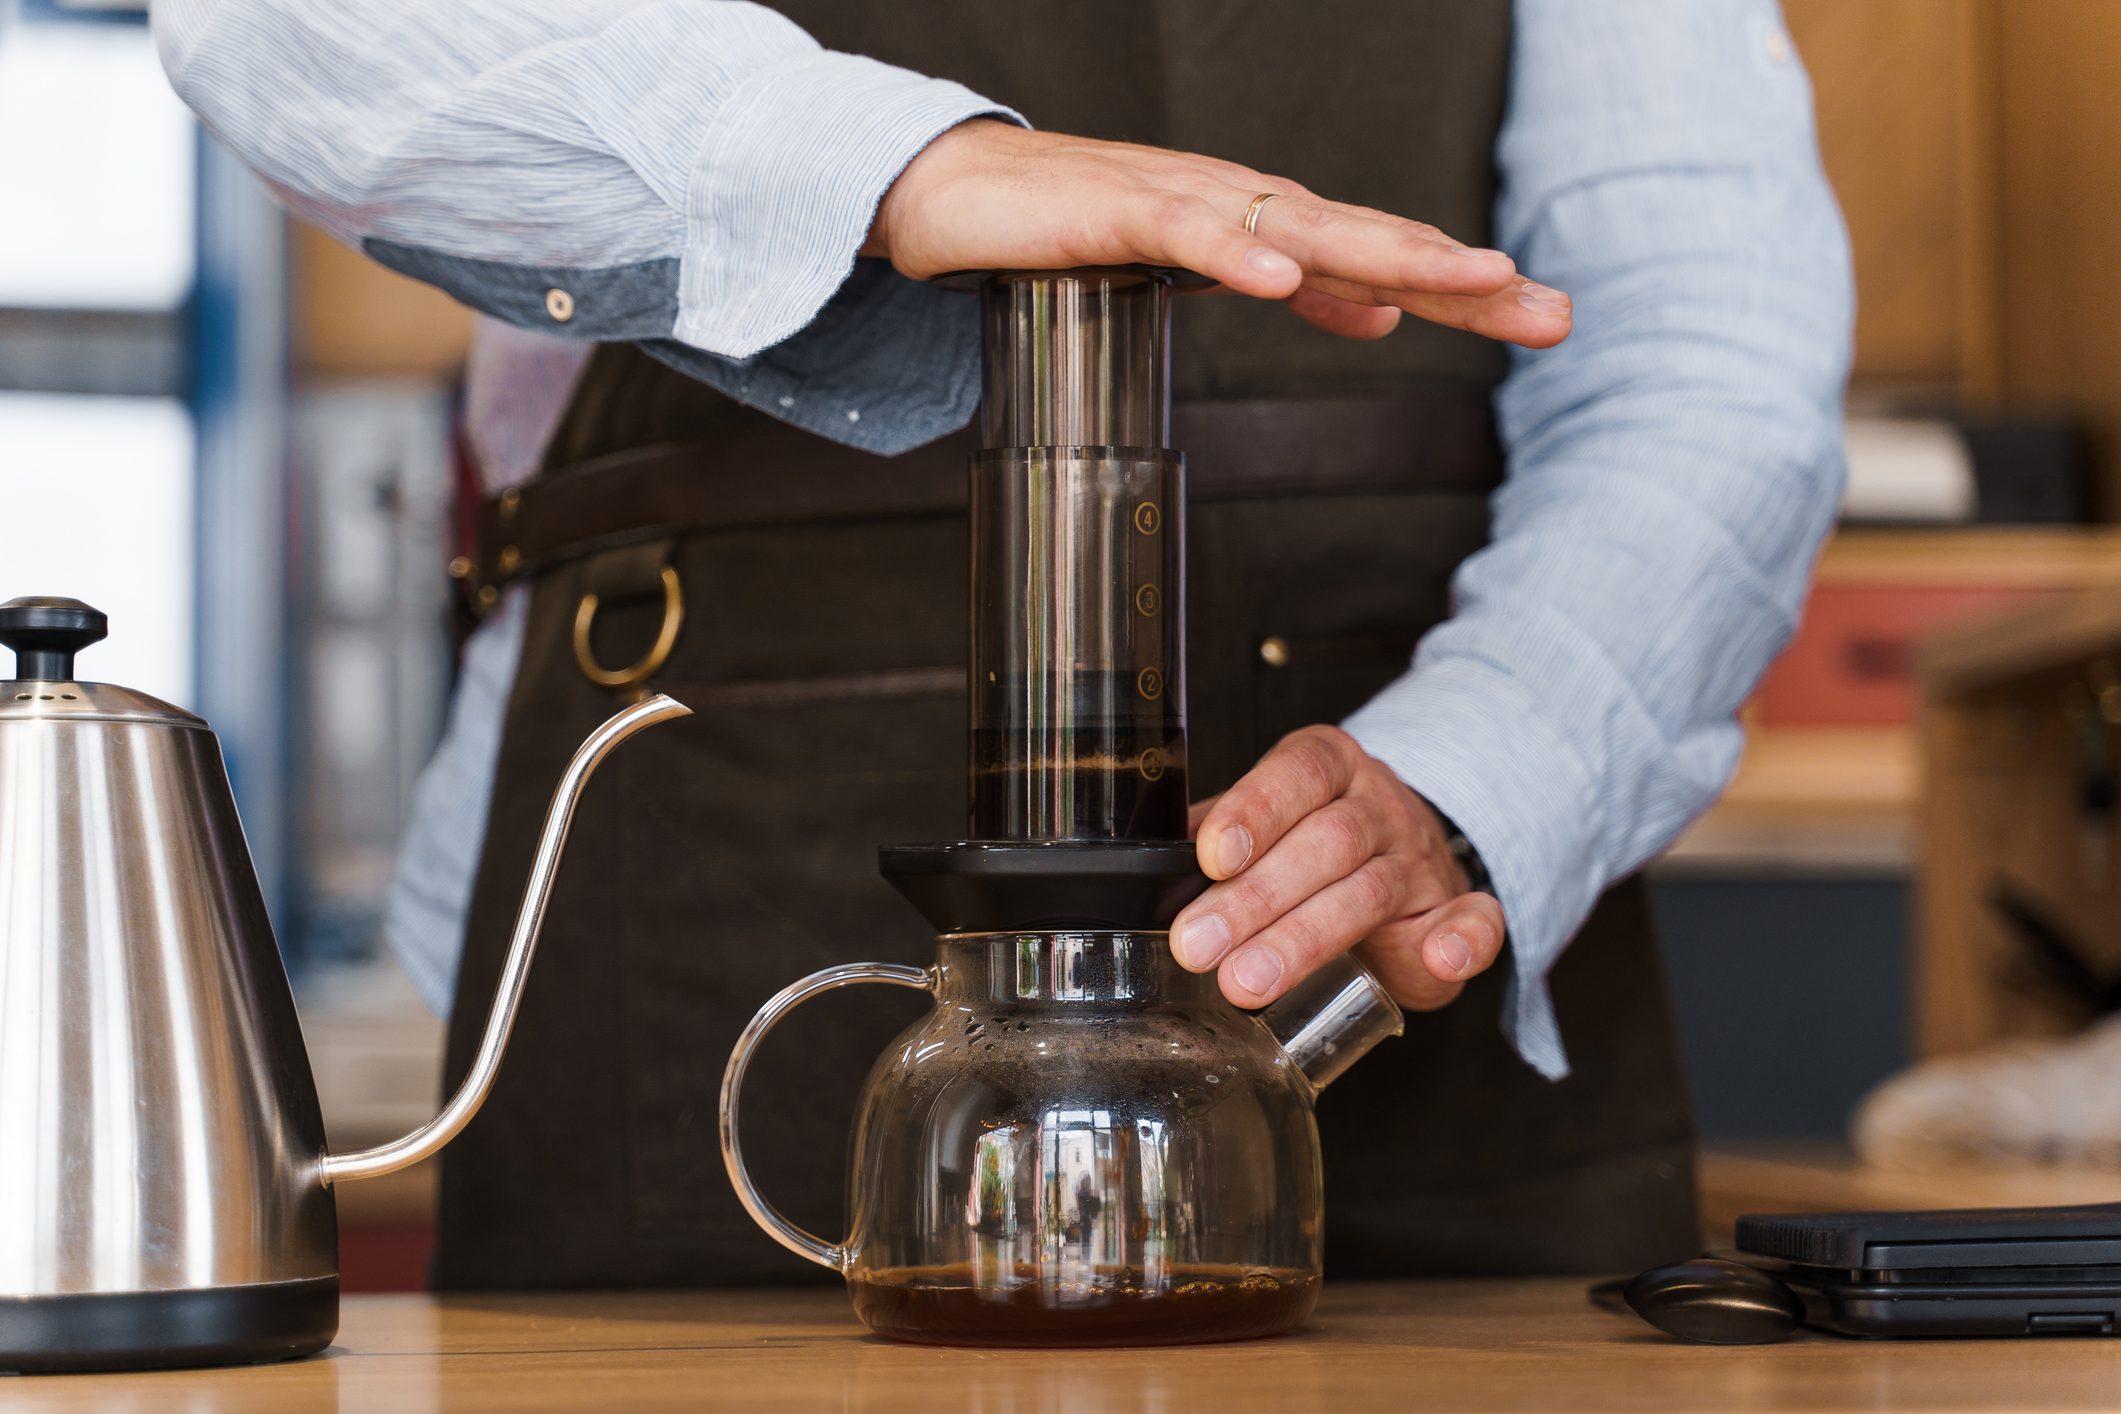 Aeropress Coffeemaker: The Best Way To Make Coffee